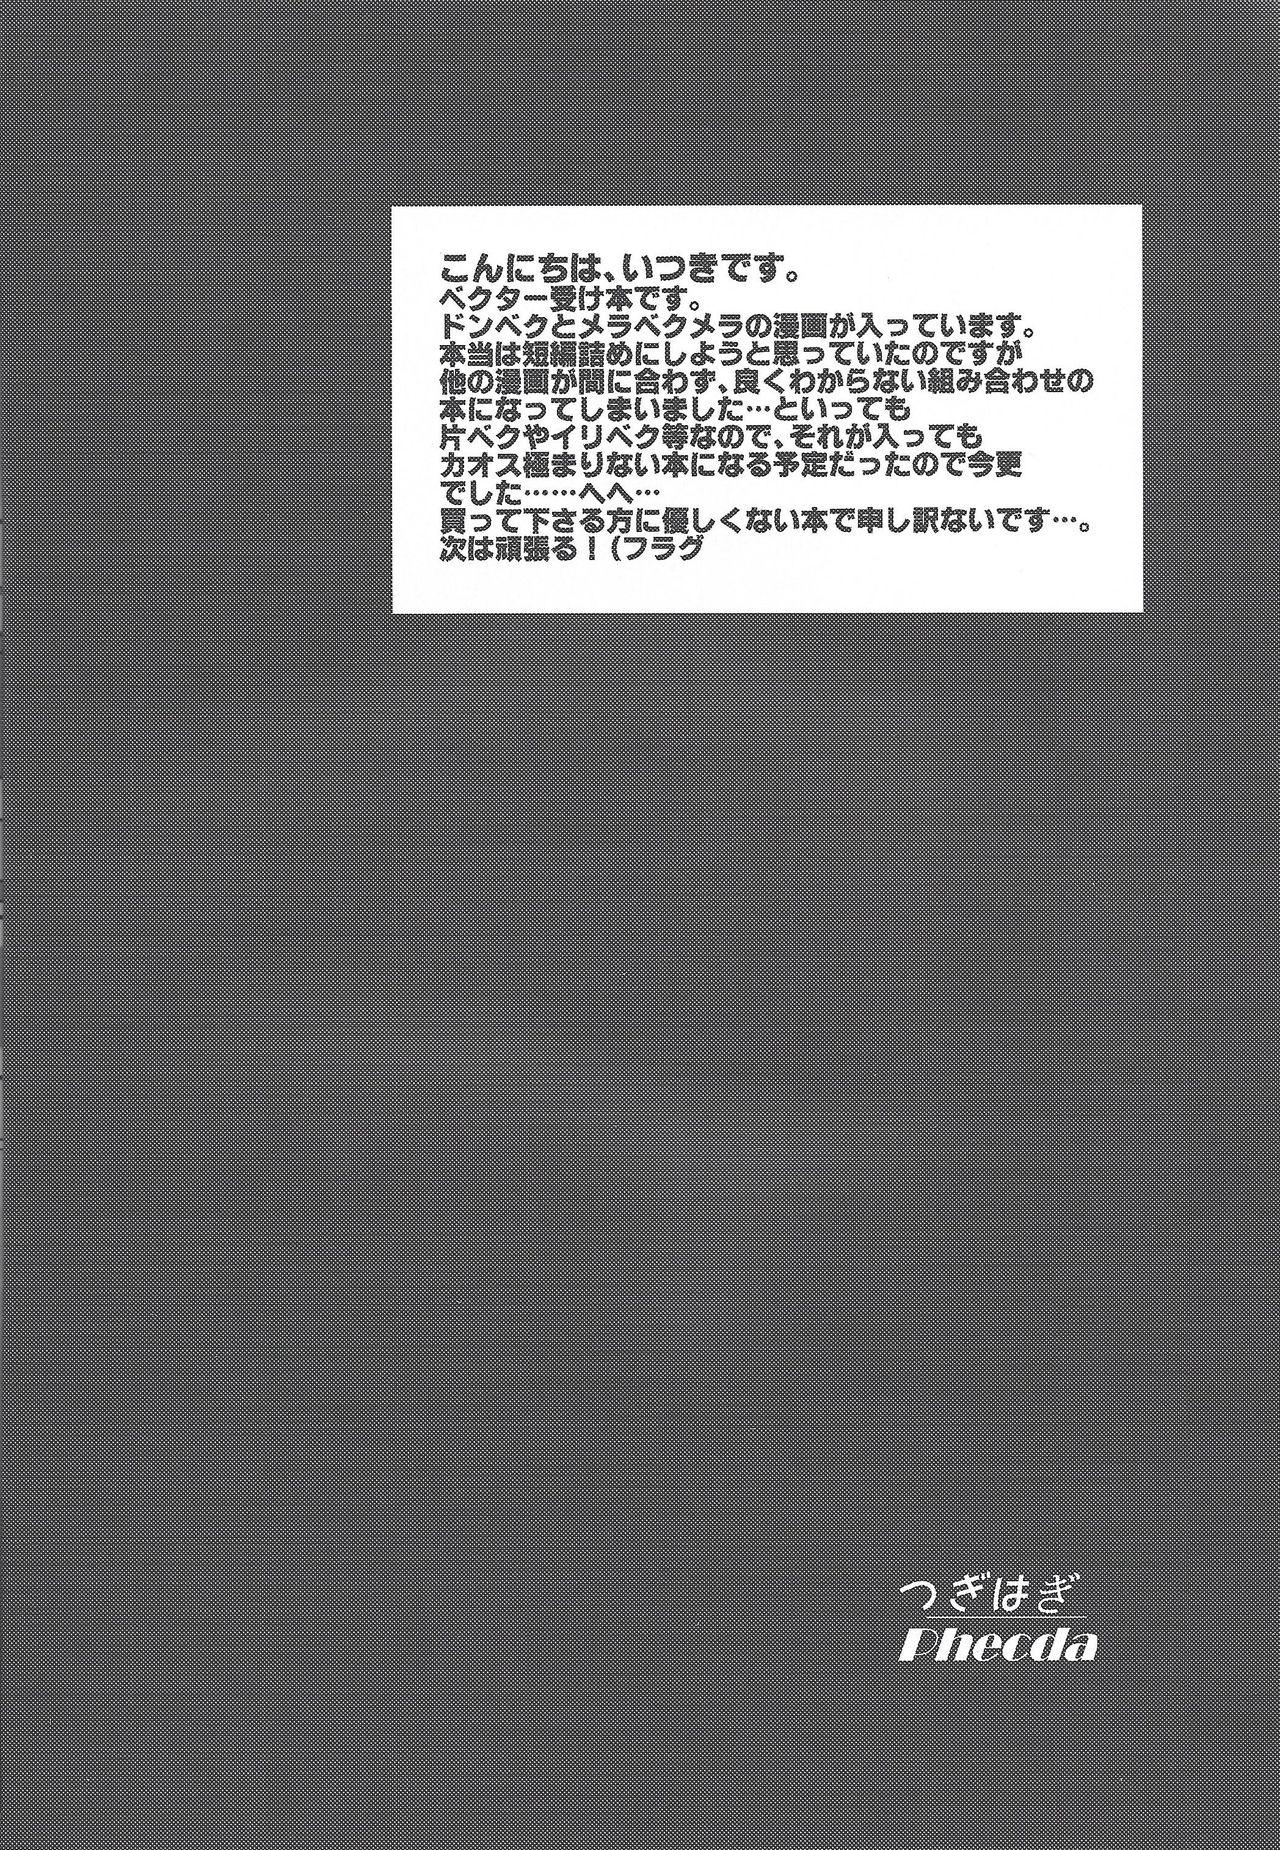 Softcore Tsugi hagi Phecda - Yu-gi-oh zexal Cruising - Page 3